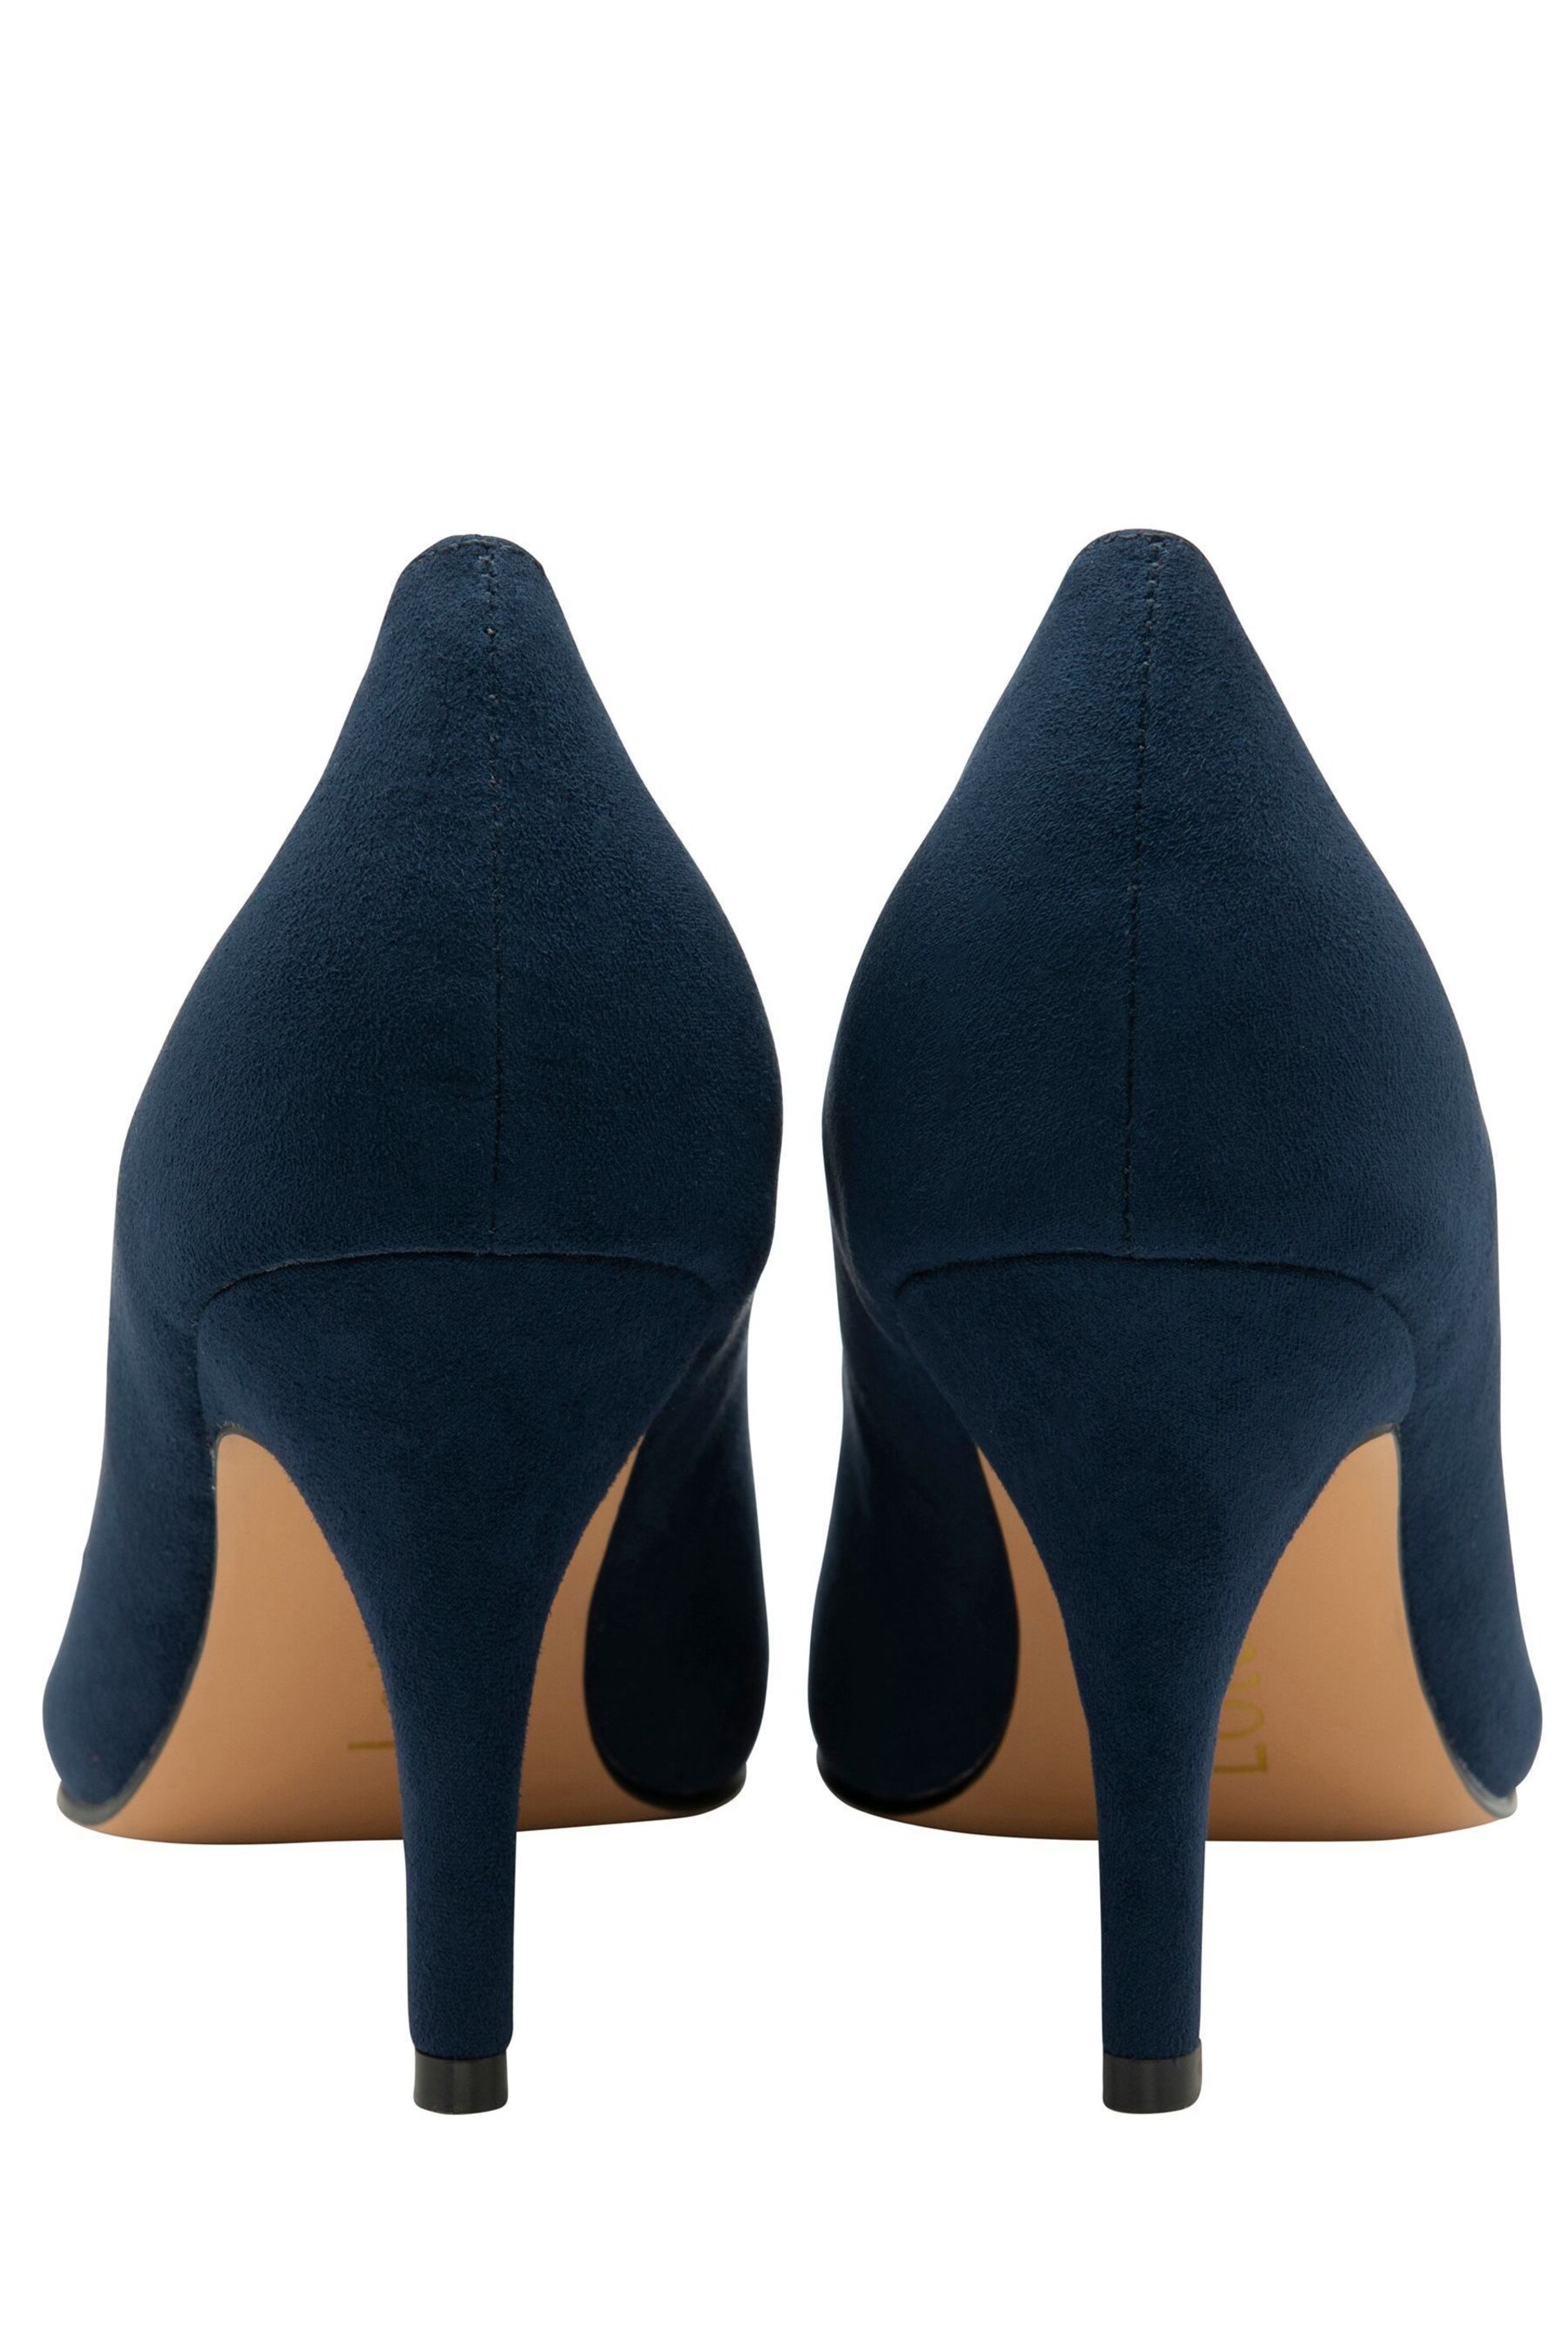 Lotus Blue Stiletto-Heel Court Shoes - Image 3 of 4